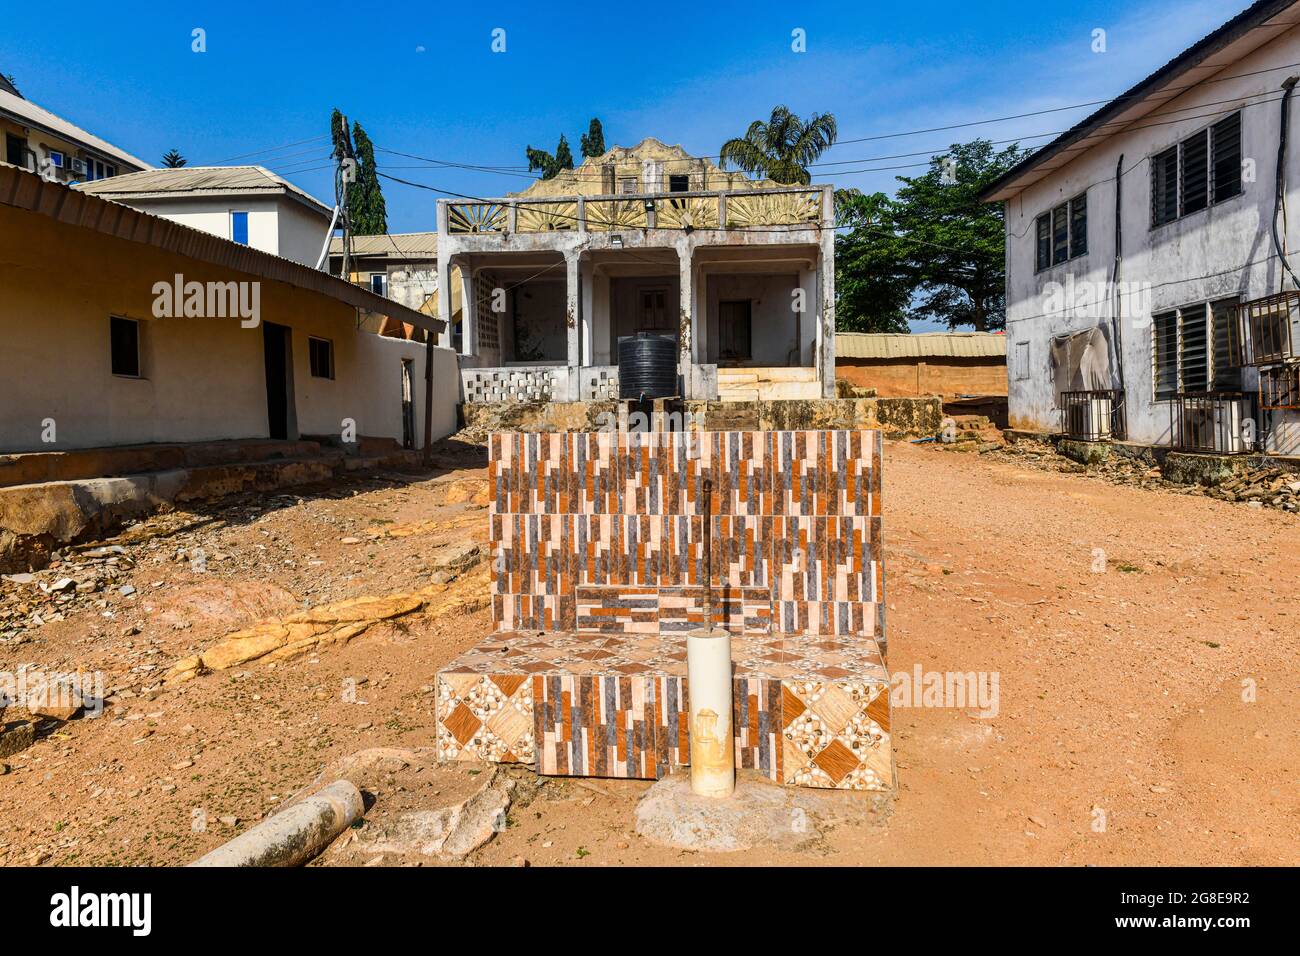 King's palace, Owo, Ondo state, Nigeria Stock Photo